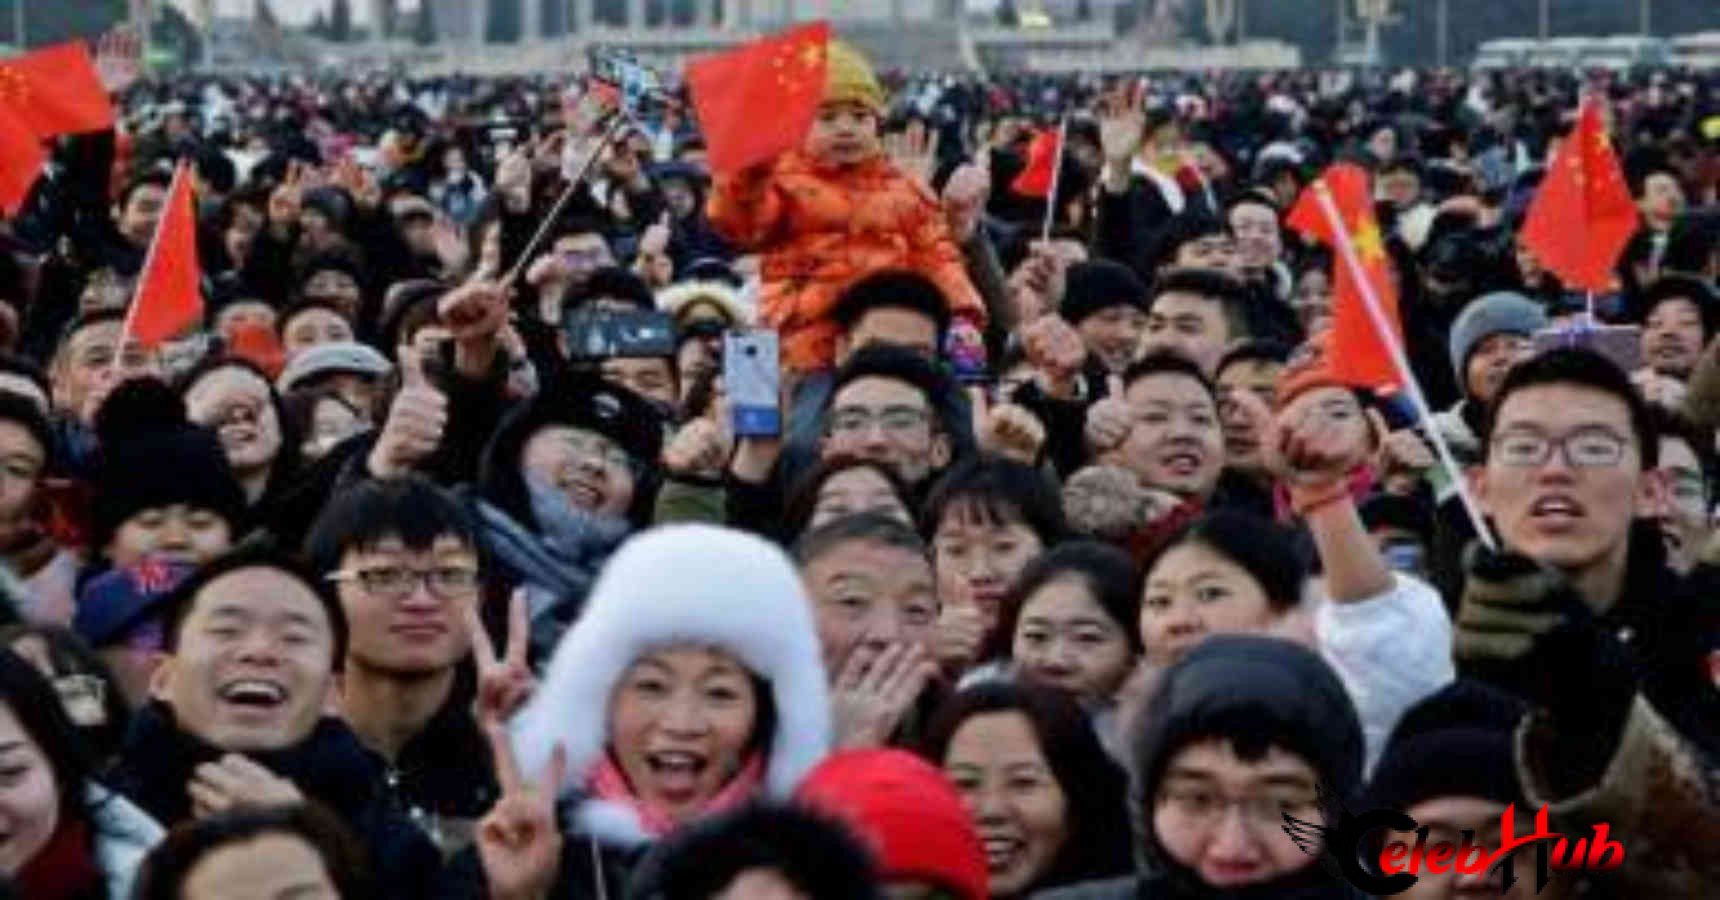 China population